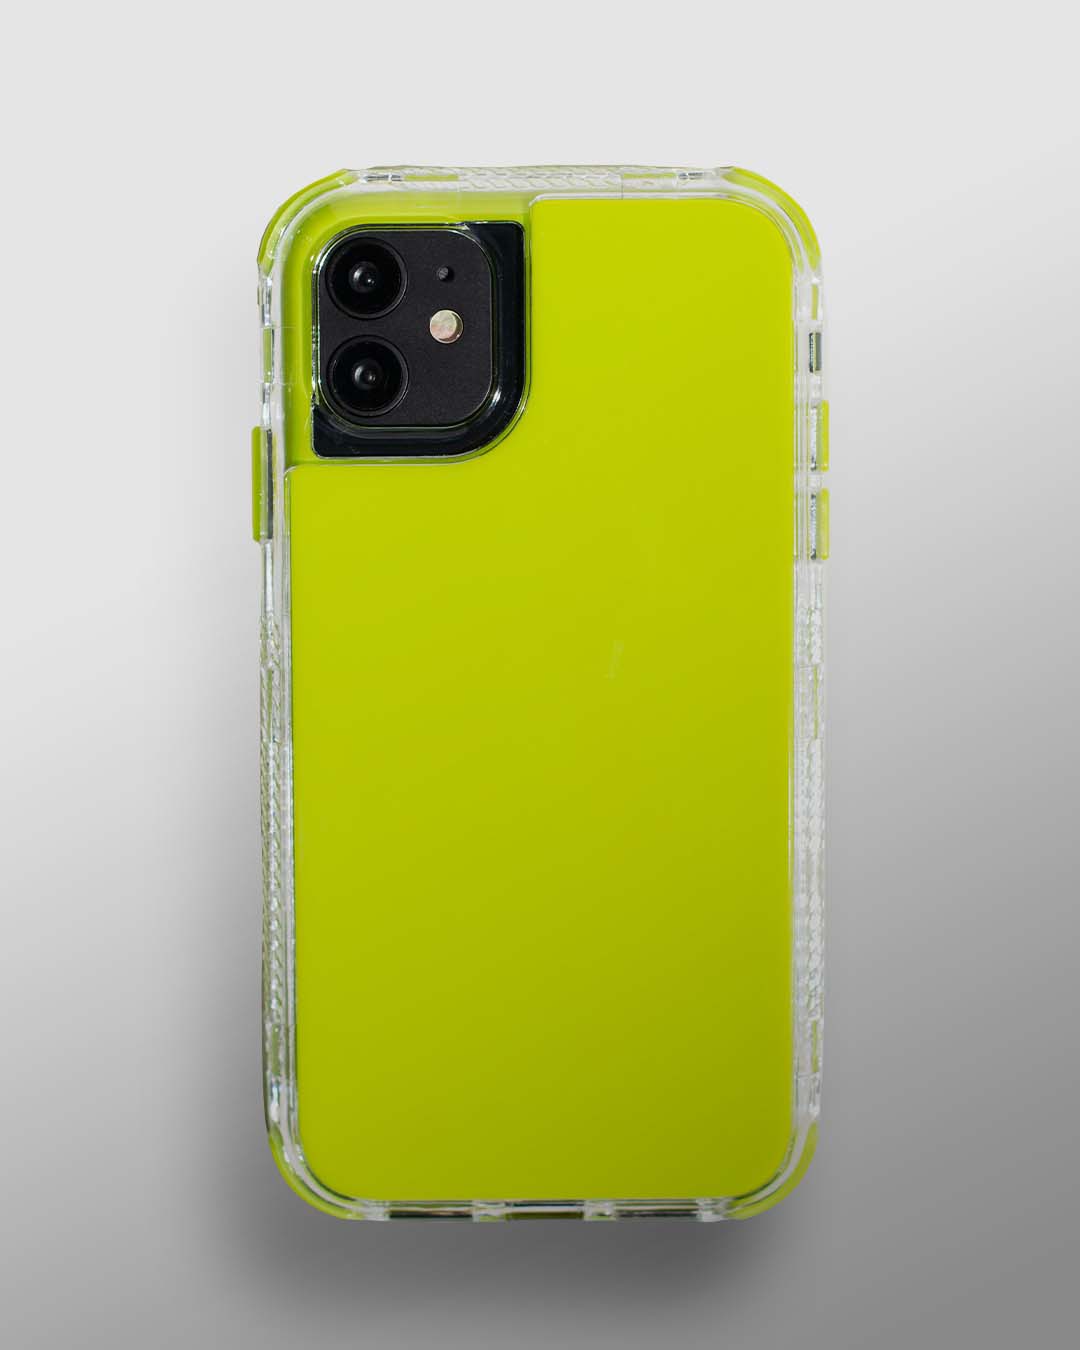 Green 3 in 1 Iphone Case